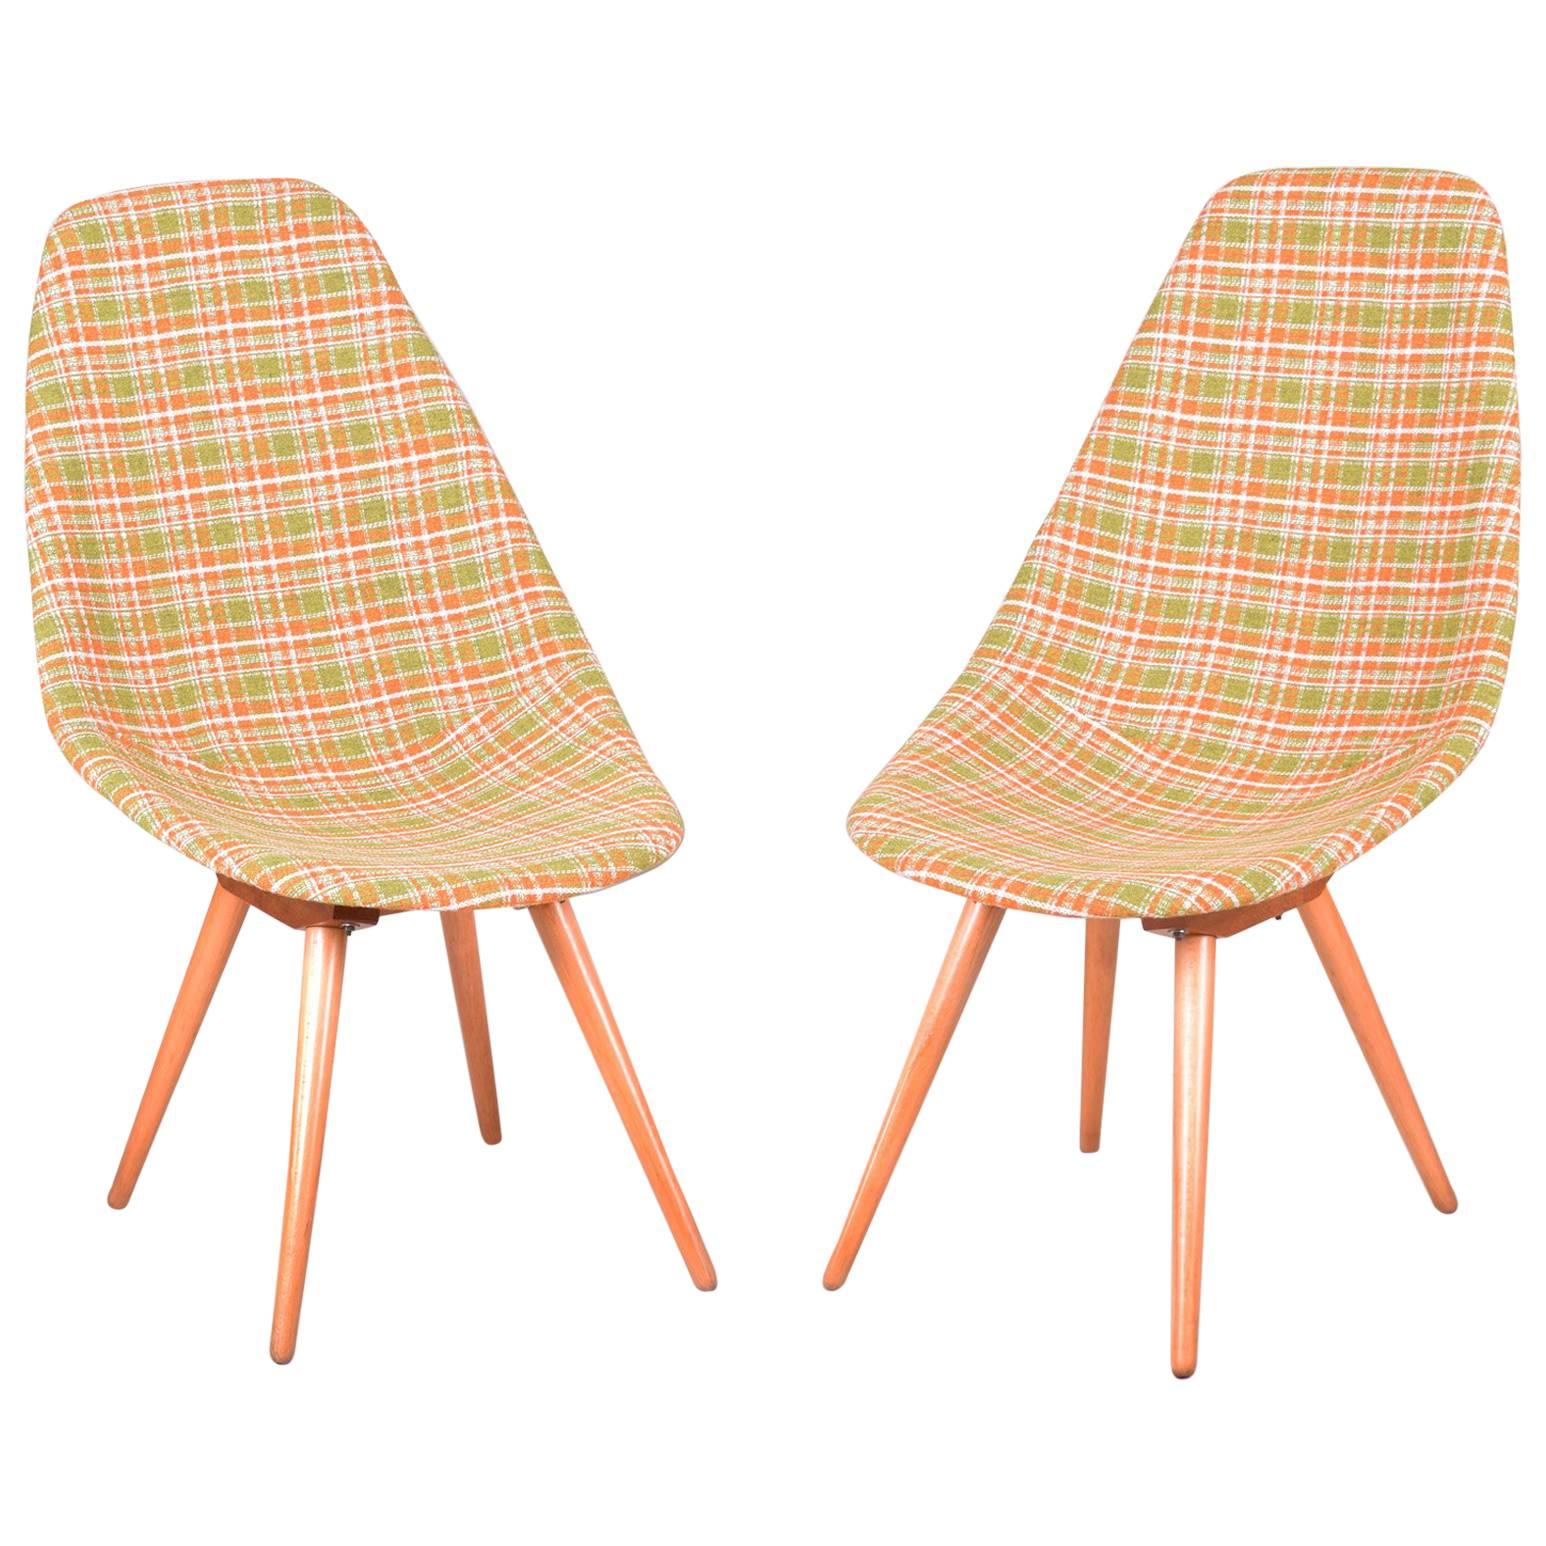 Restored Pair of Czechoslovakia Midcentury Chairs, 1950-1960